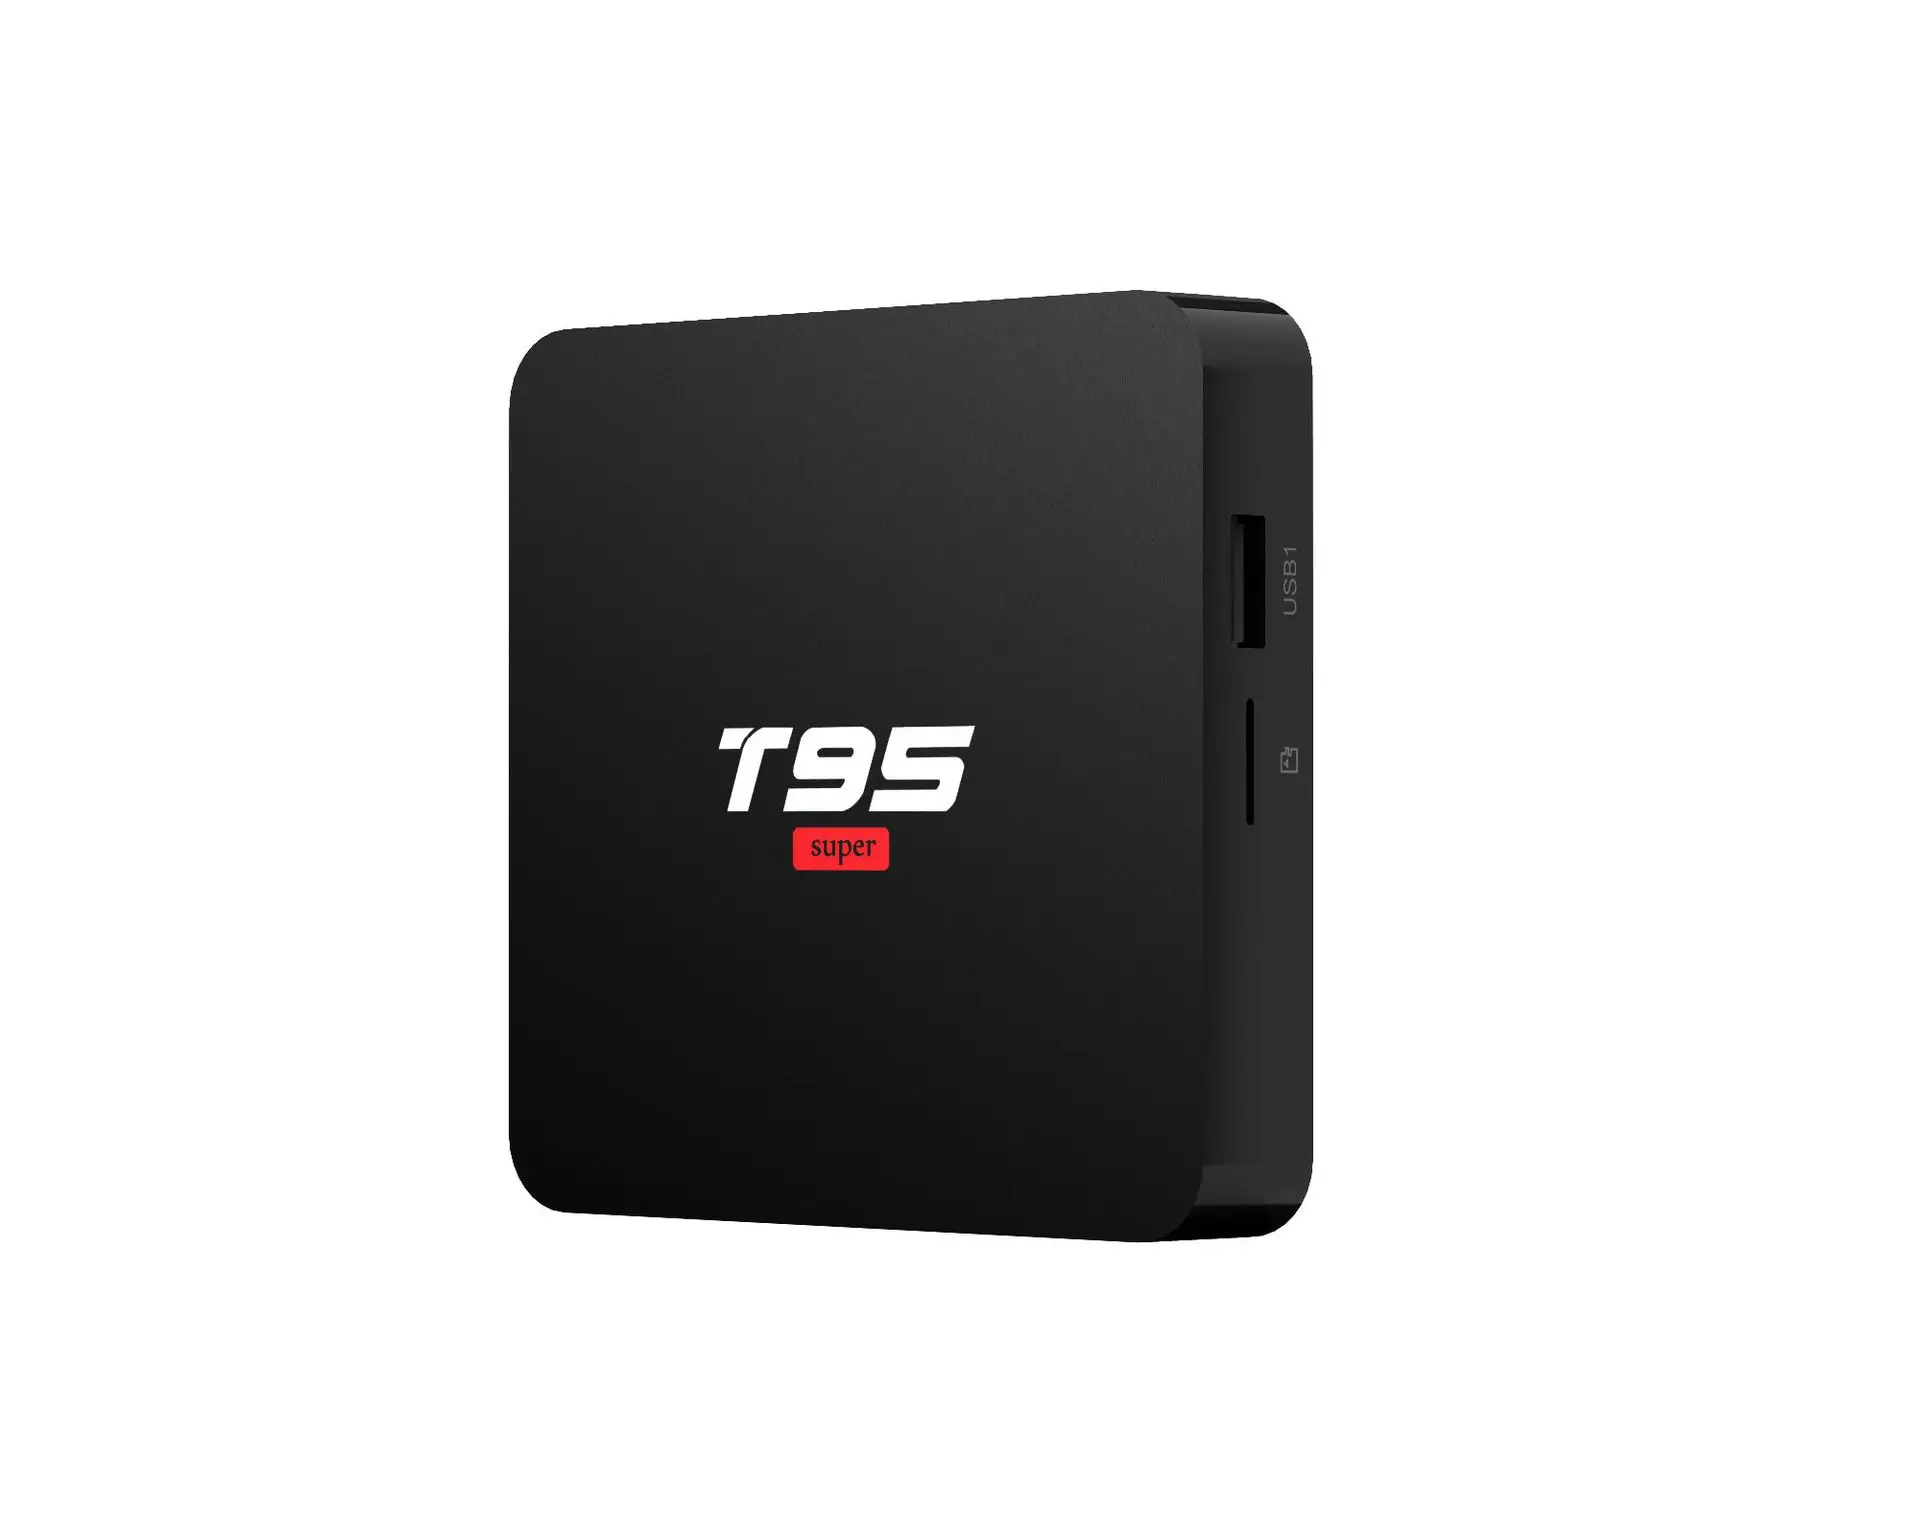 

T95 Super Android 10.0 TV Box 2GB 16GB Smart TV BOX Allwinner H3 Quad Core 4K HDR 2.4G Wifi Play Media Player Set Top Box